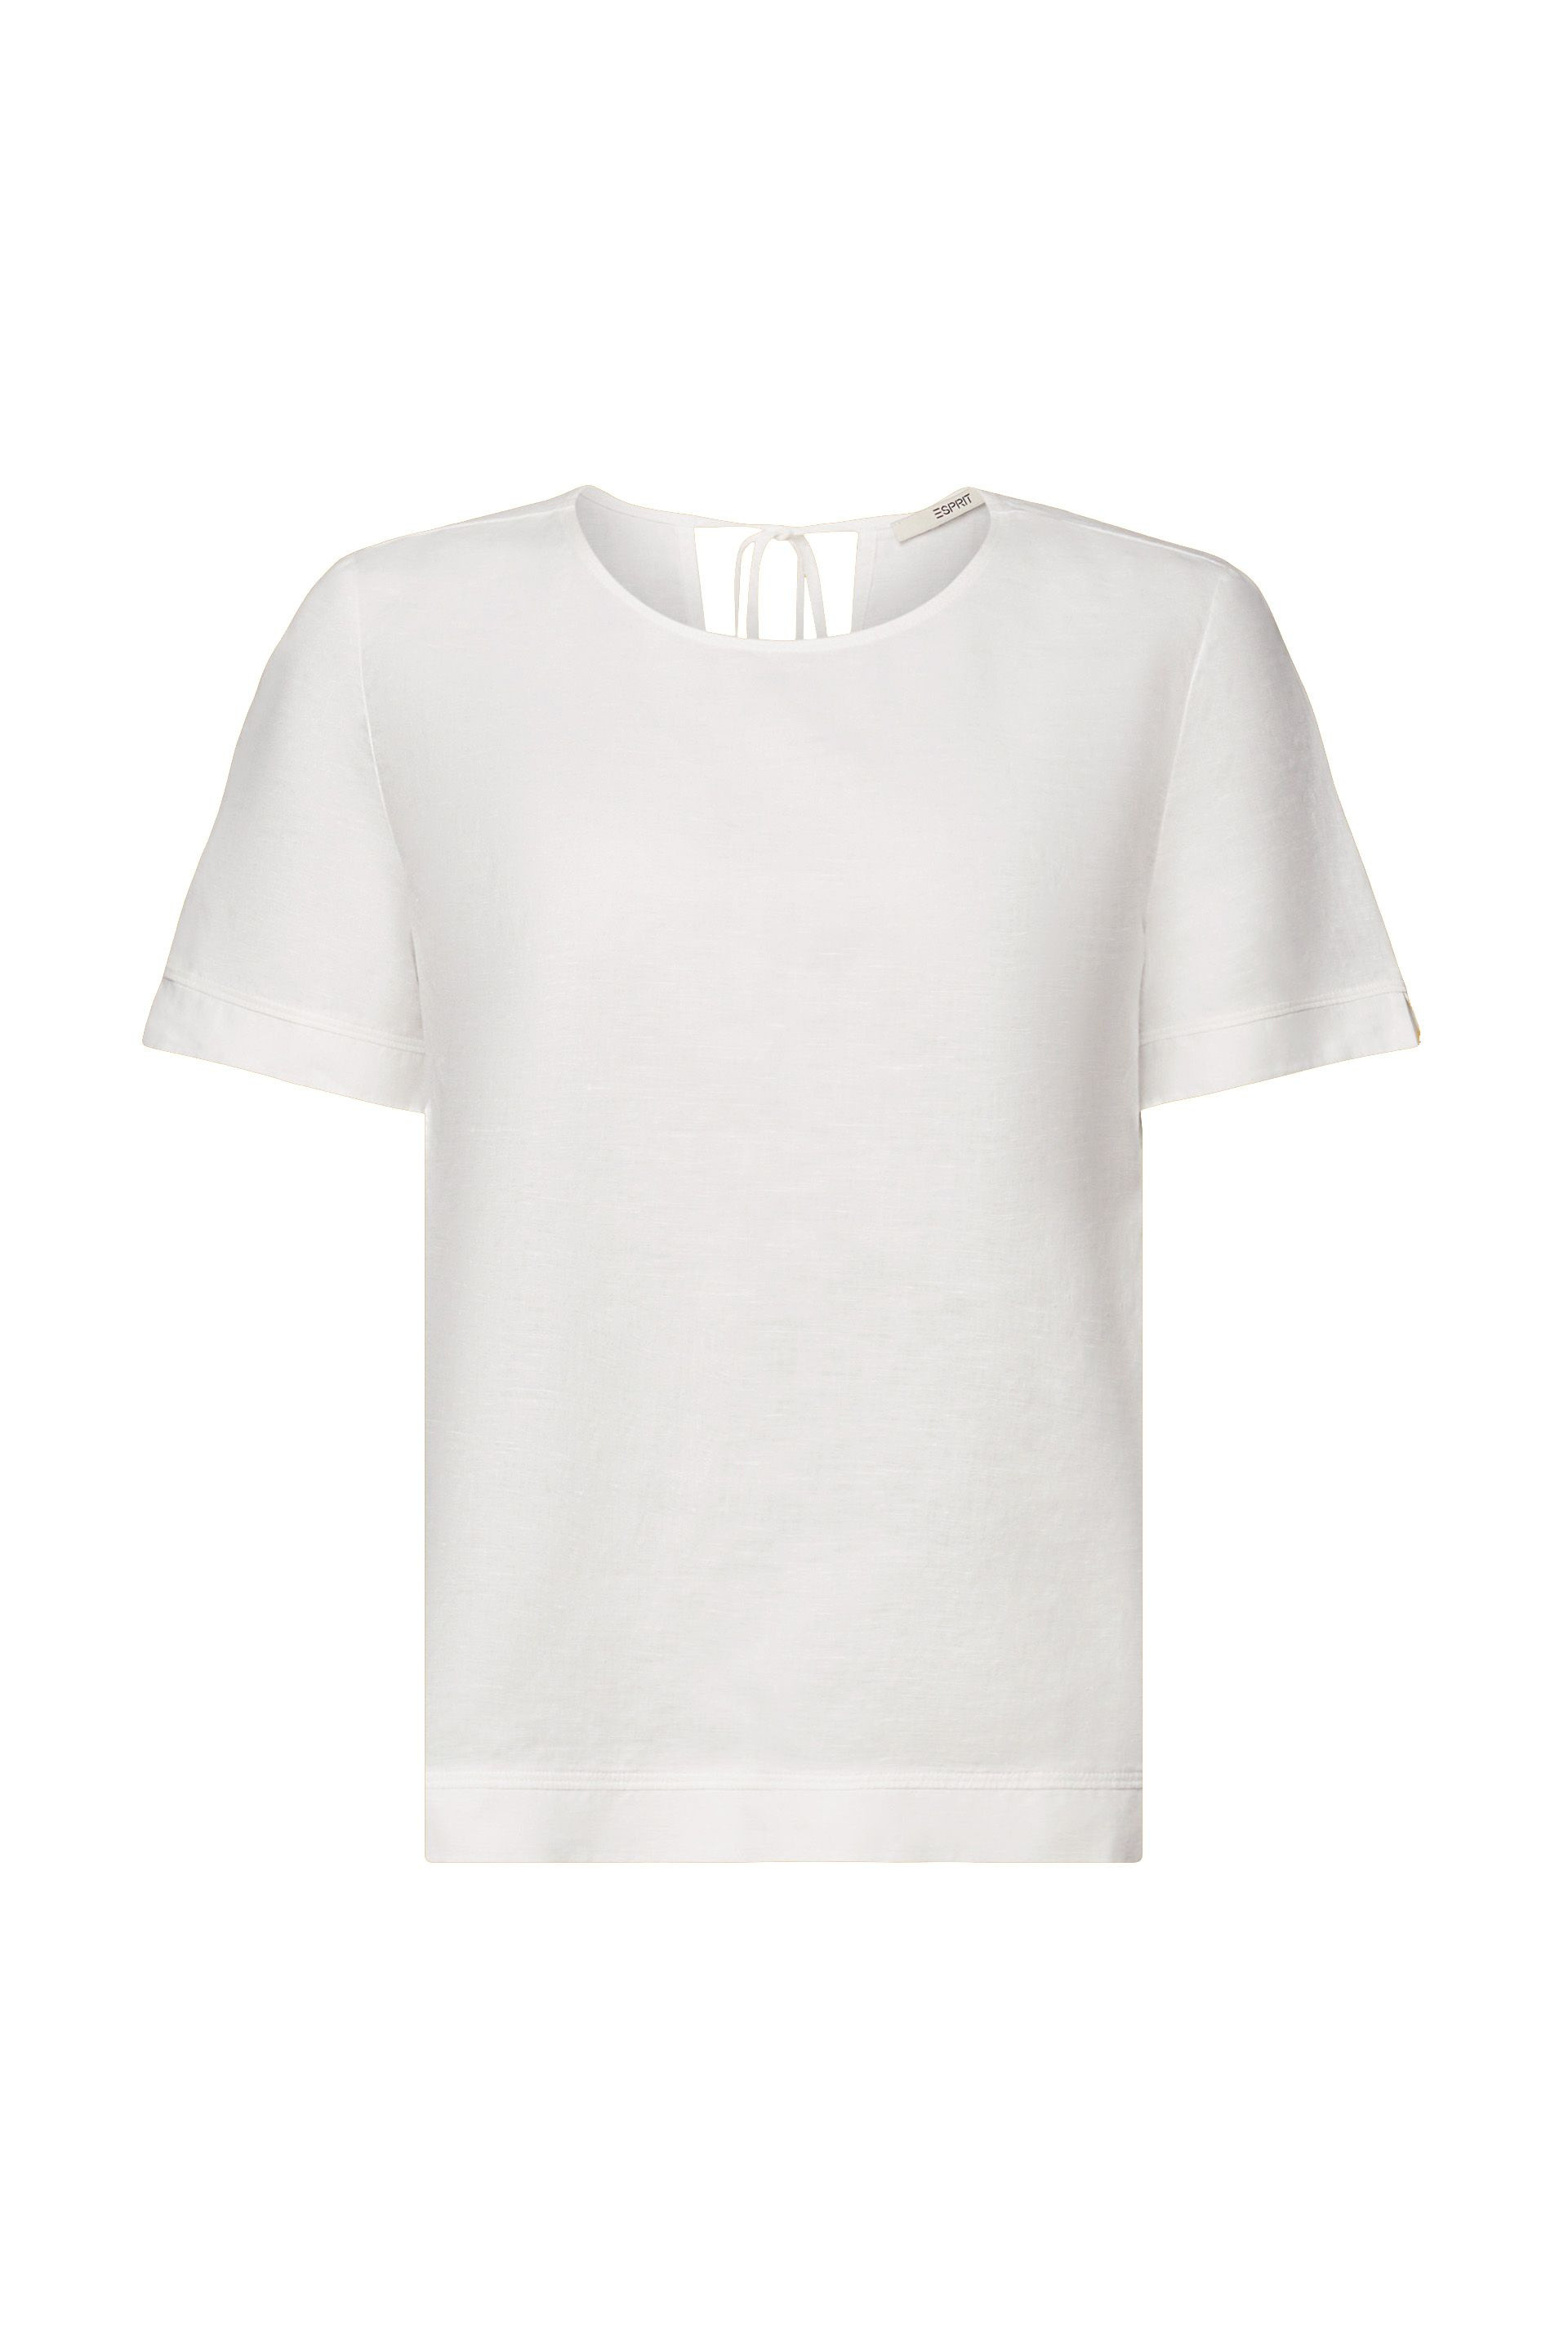 Esprit - Blusa in misto lino, Bianco, large image number 0